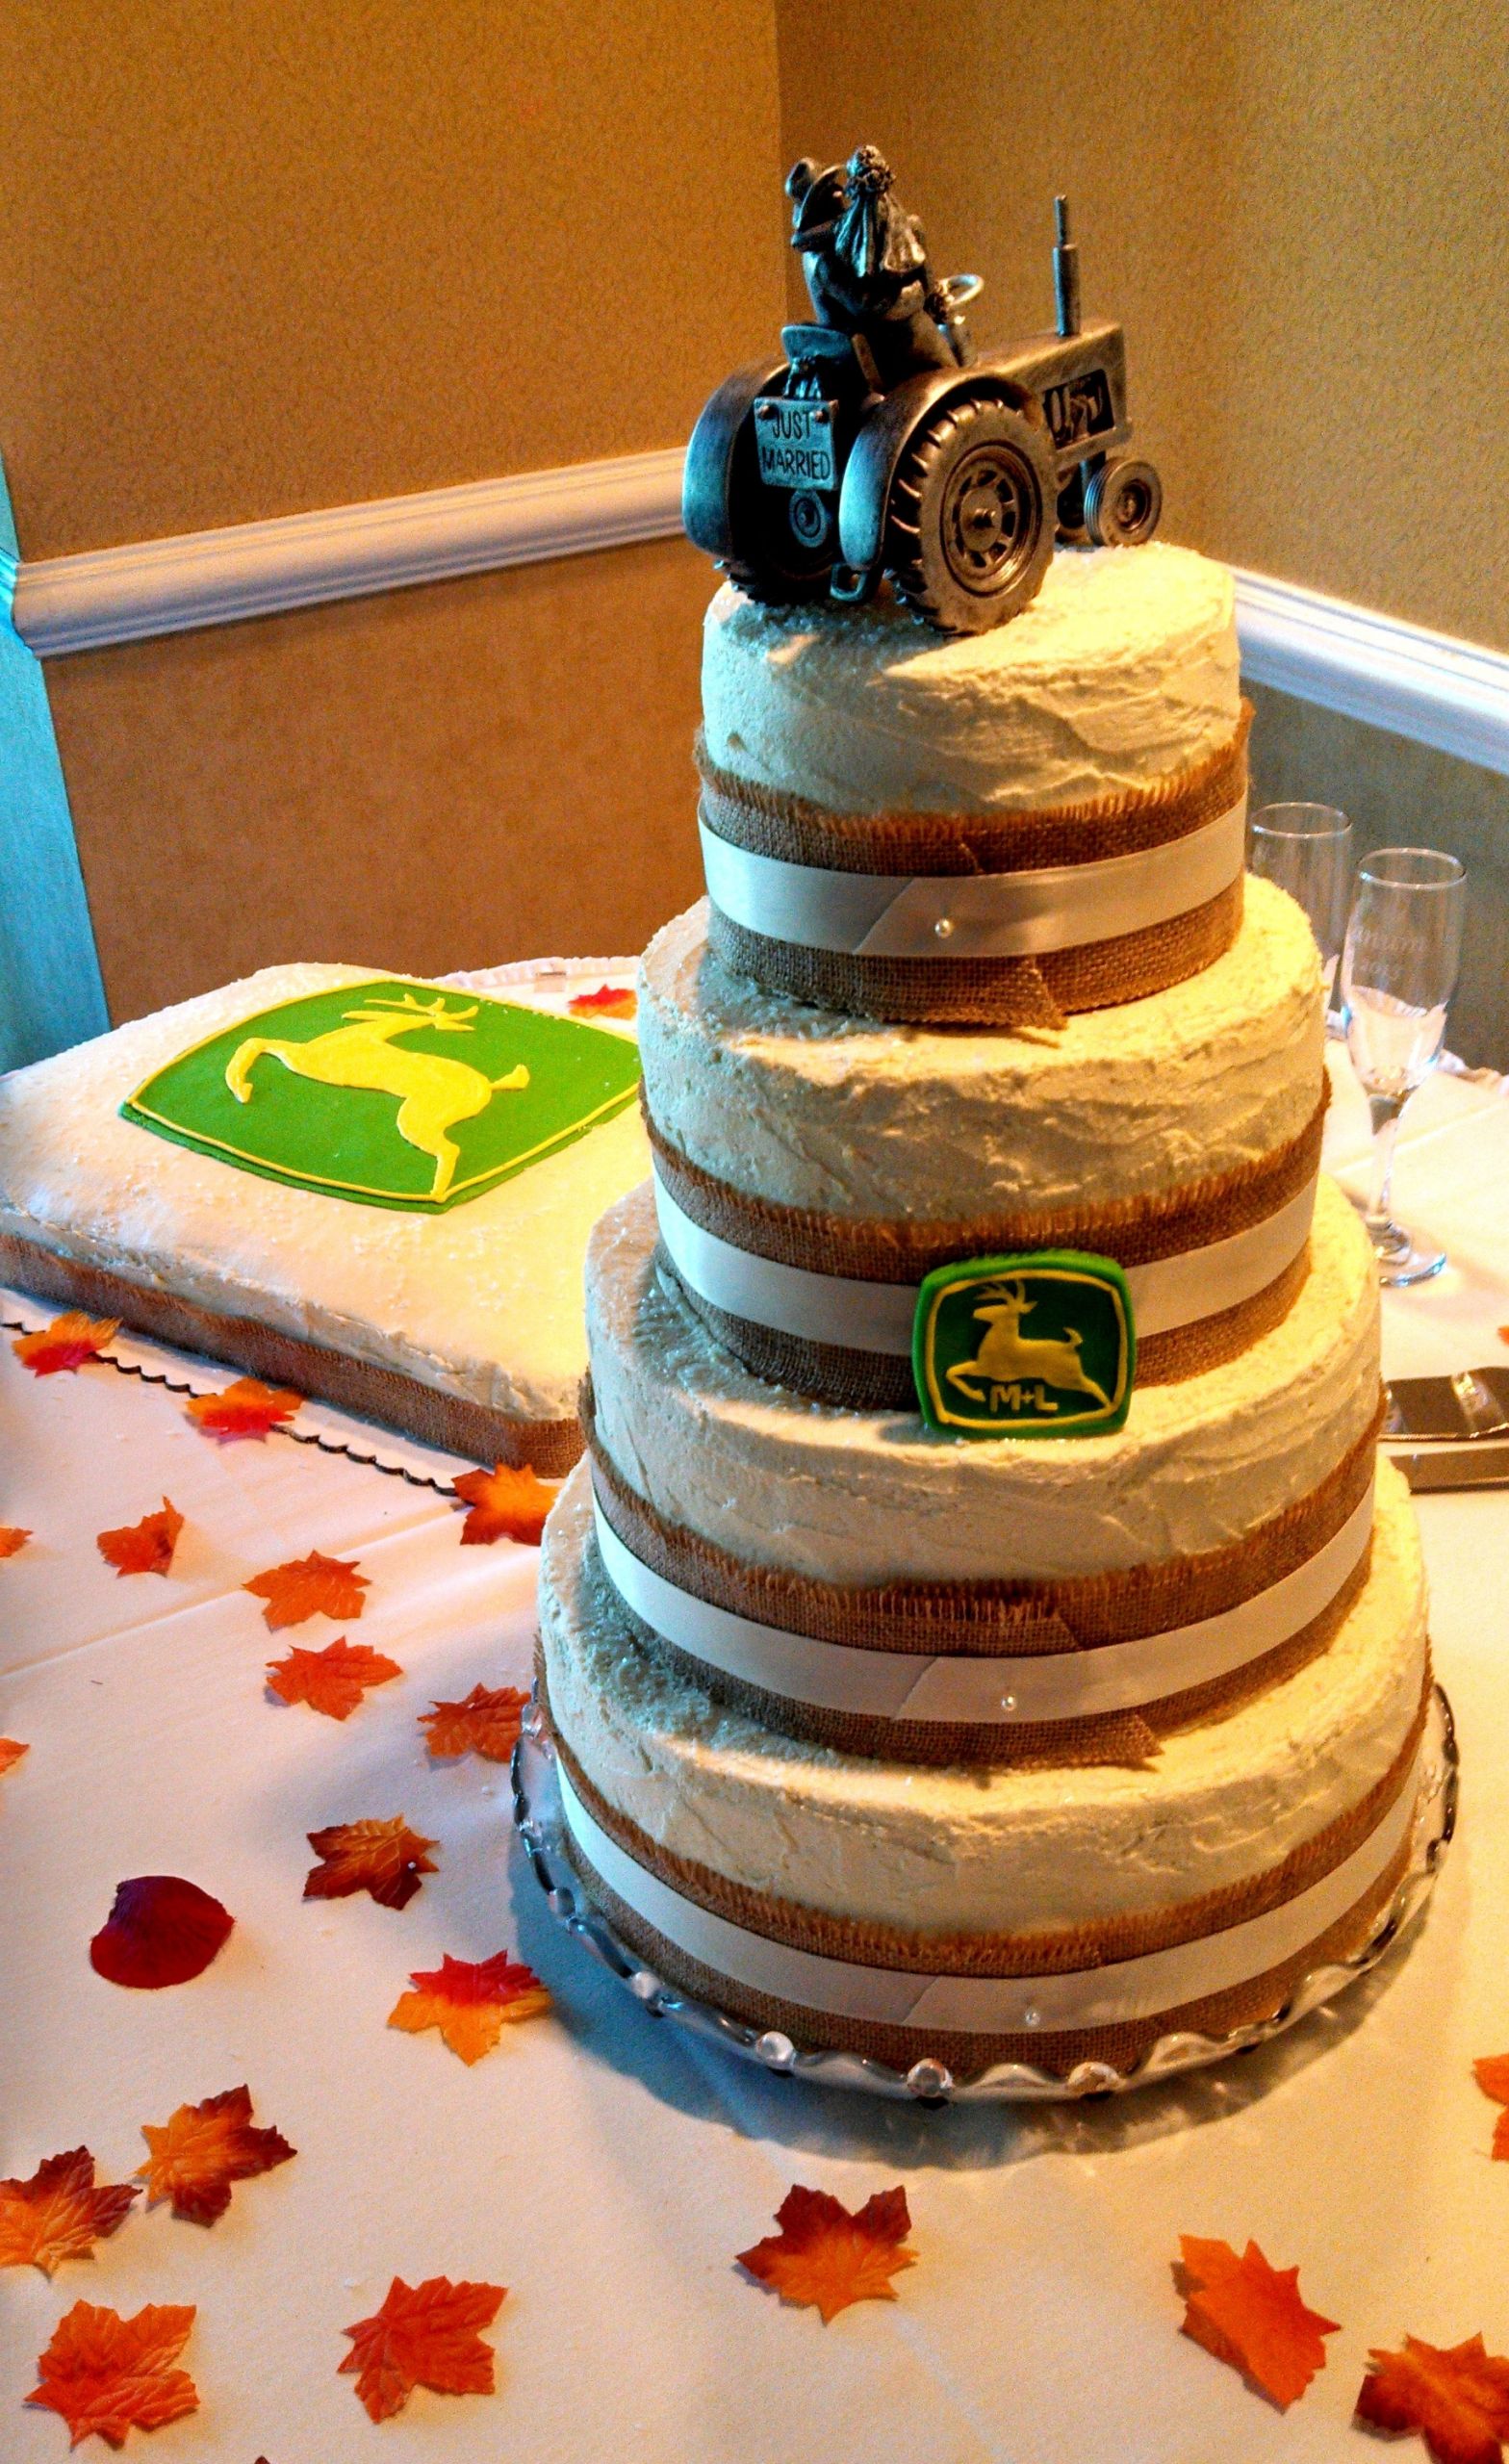 Groom Wedding Cakes
 Rustic 4 Tier Wedding Cake And John Deere Groom s Cake